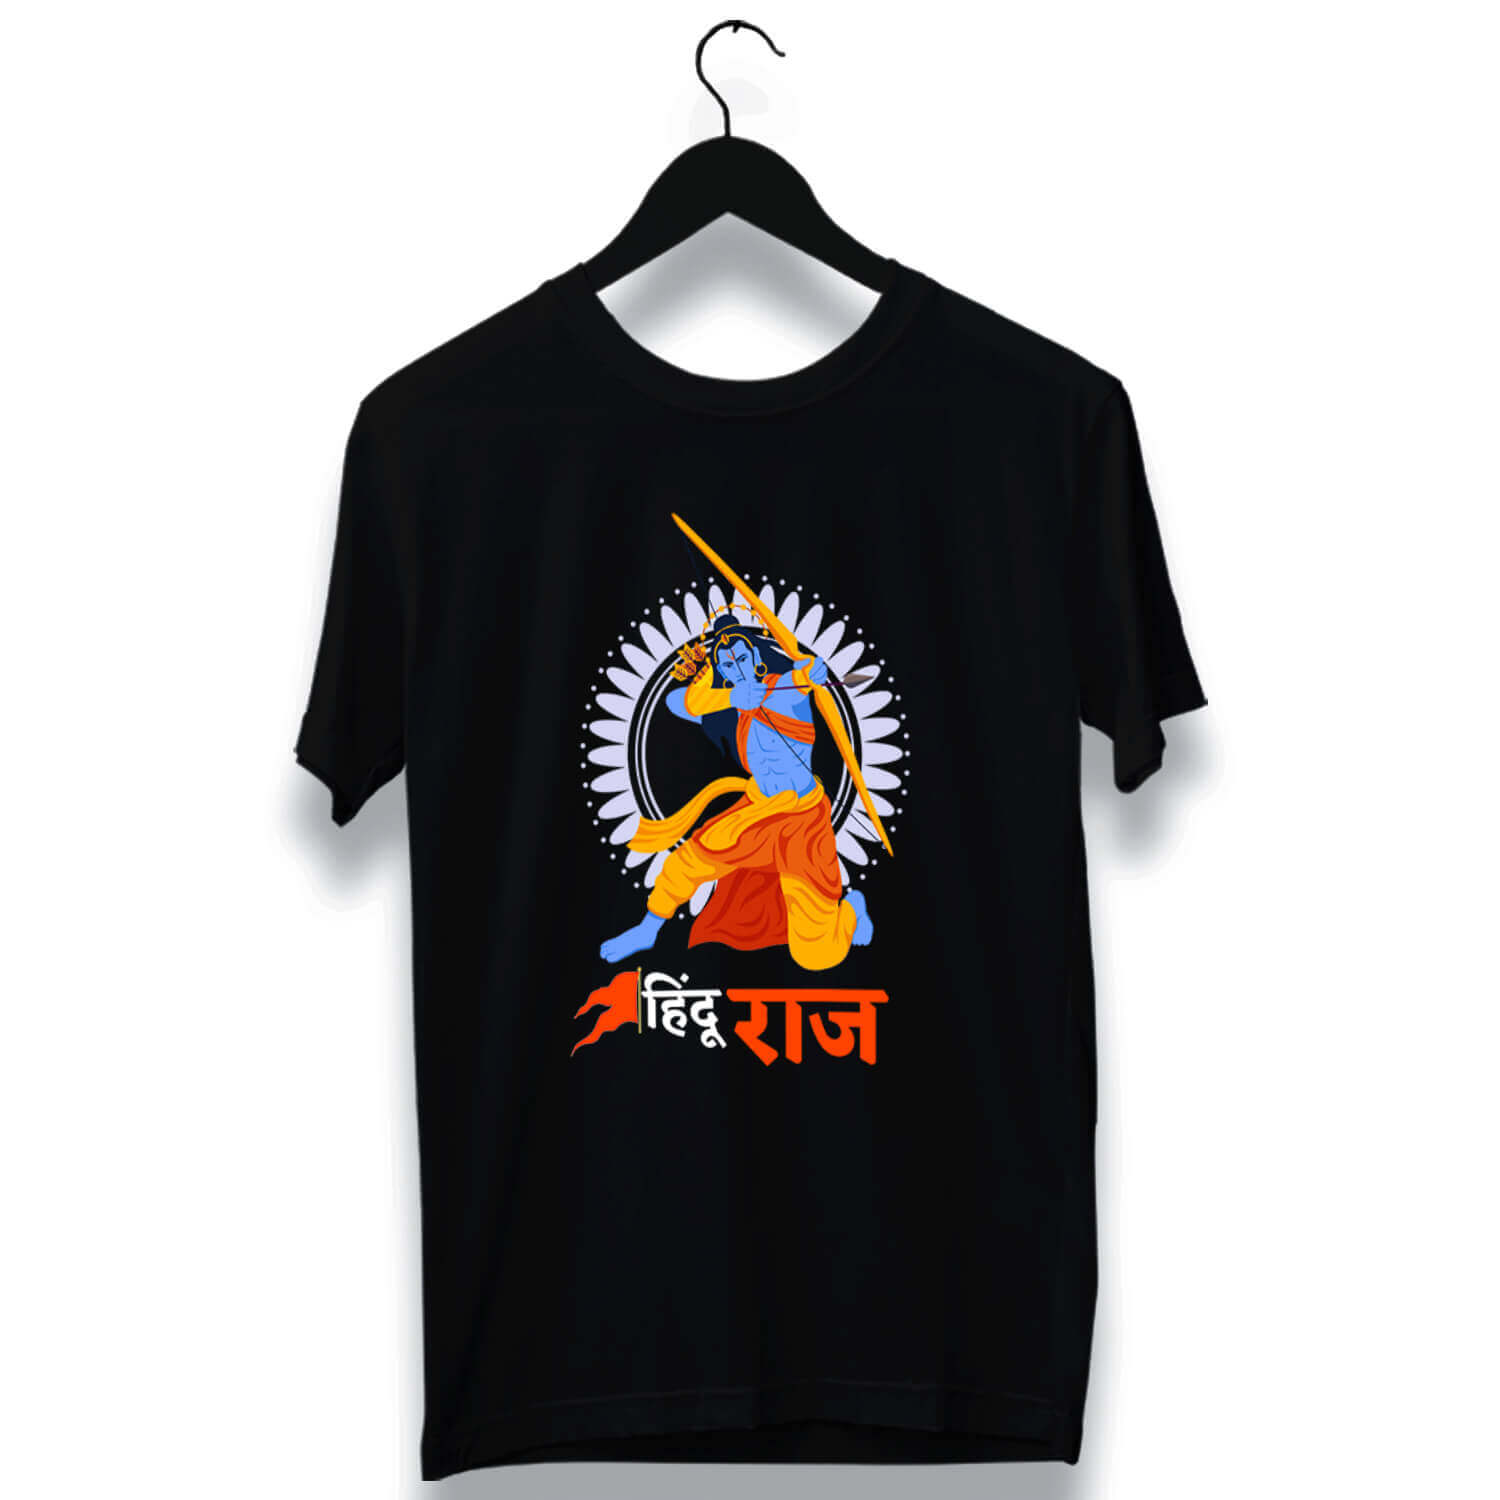 Shree Ram and Hindu Raj Combo printed t shirt